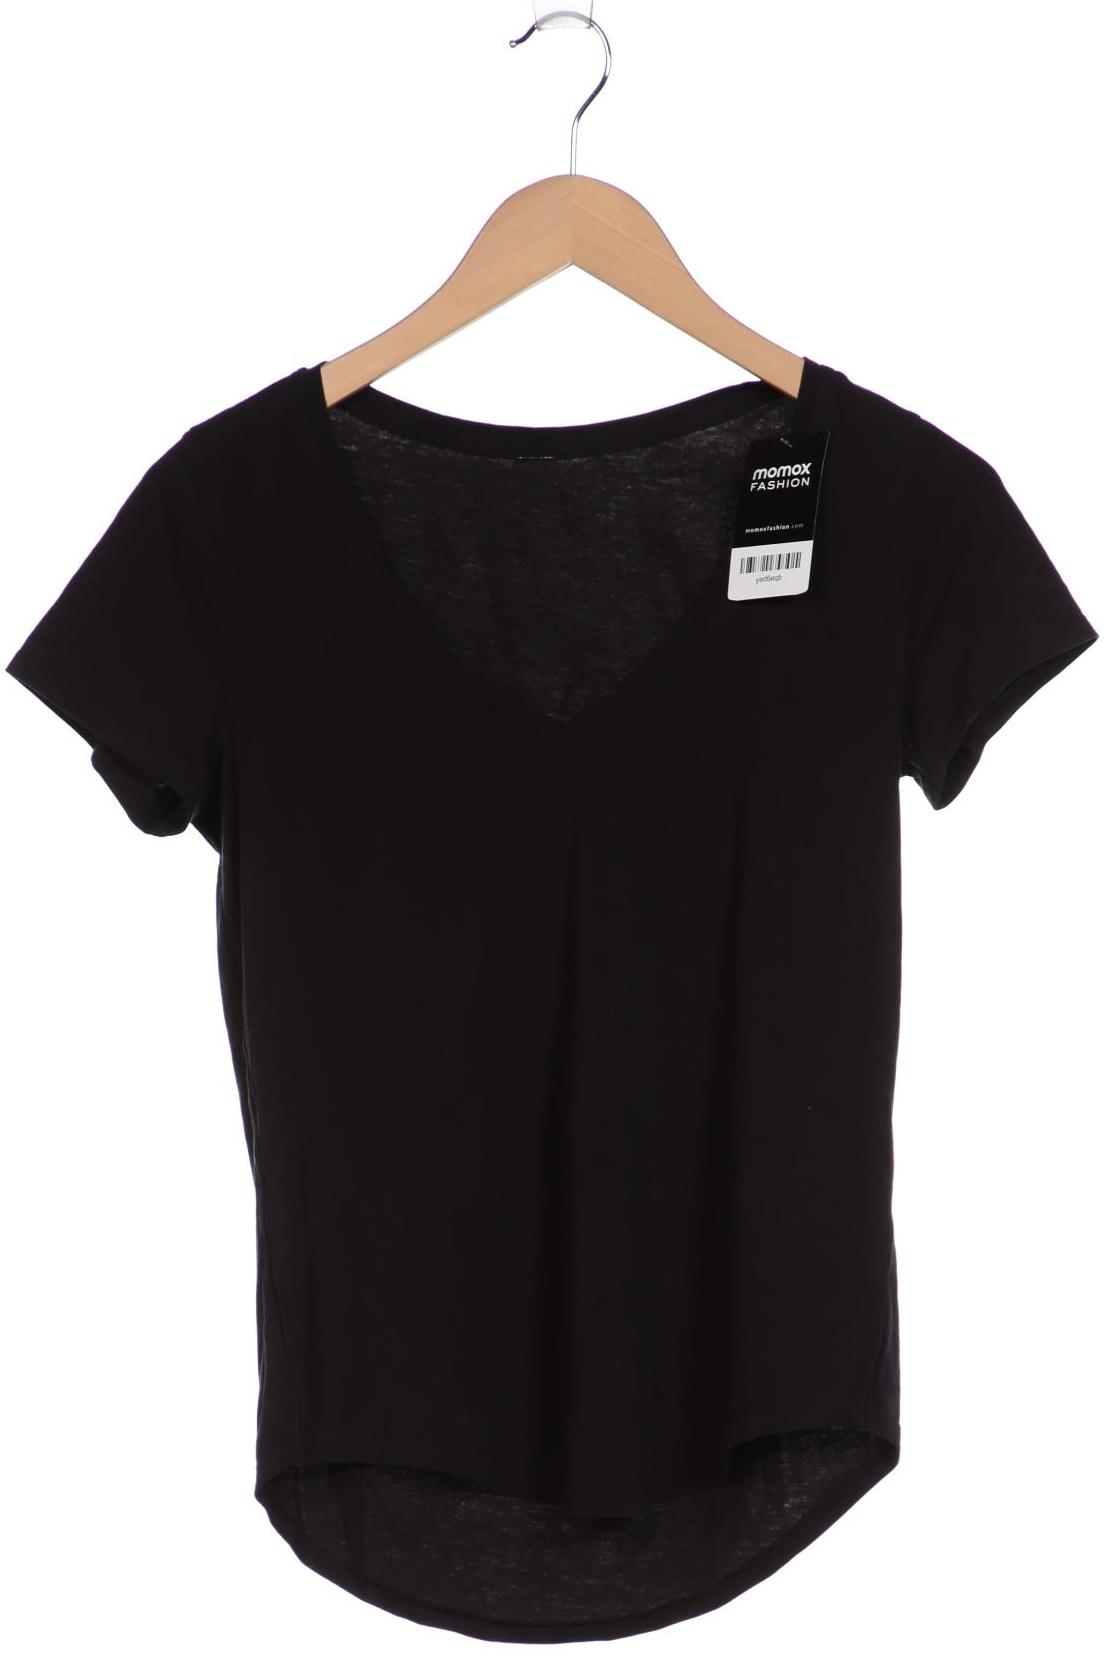 Lululemon Damen T-Shirt, schwarz, Gr. 38 von Lululemon